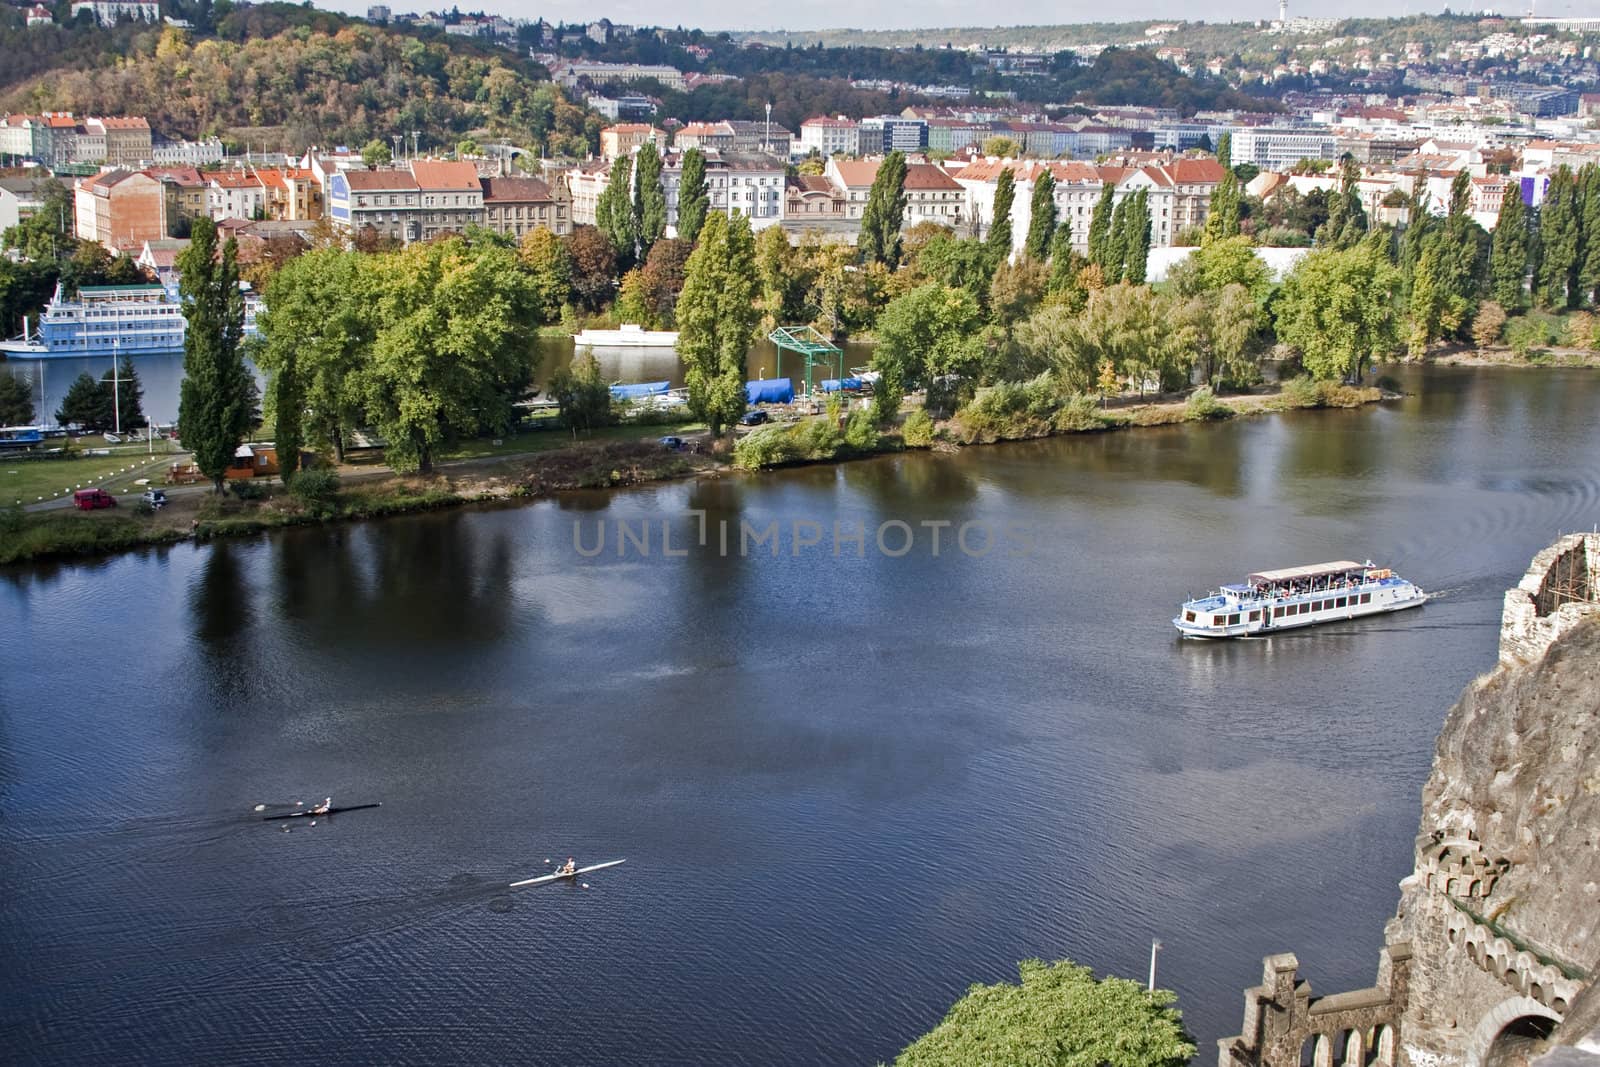 	
Prague, Vltava river, boats by tmirlin